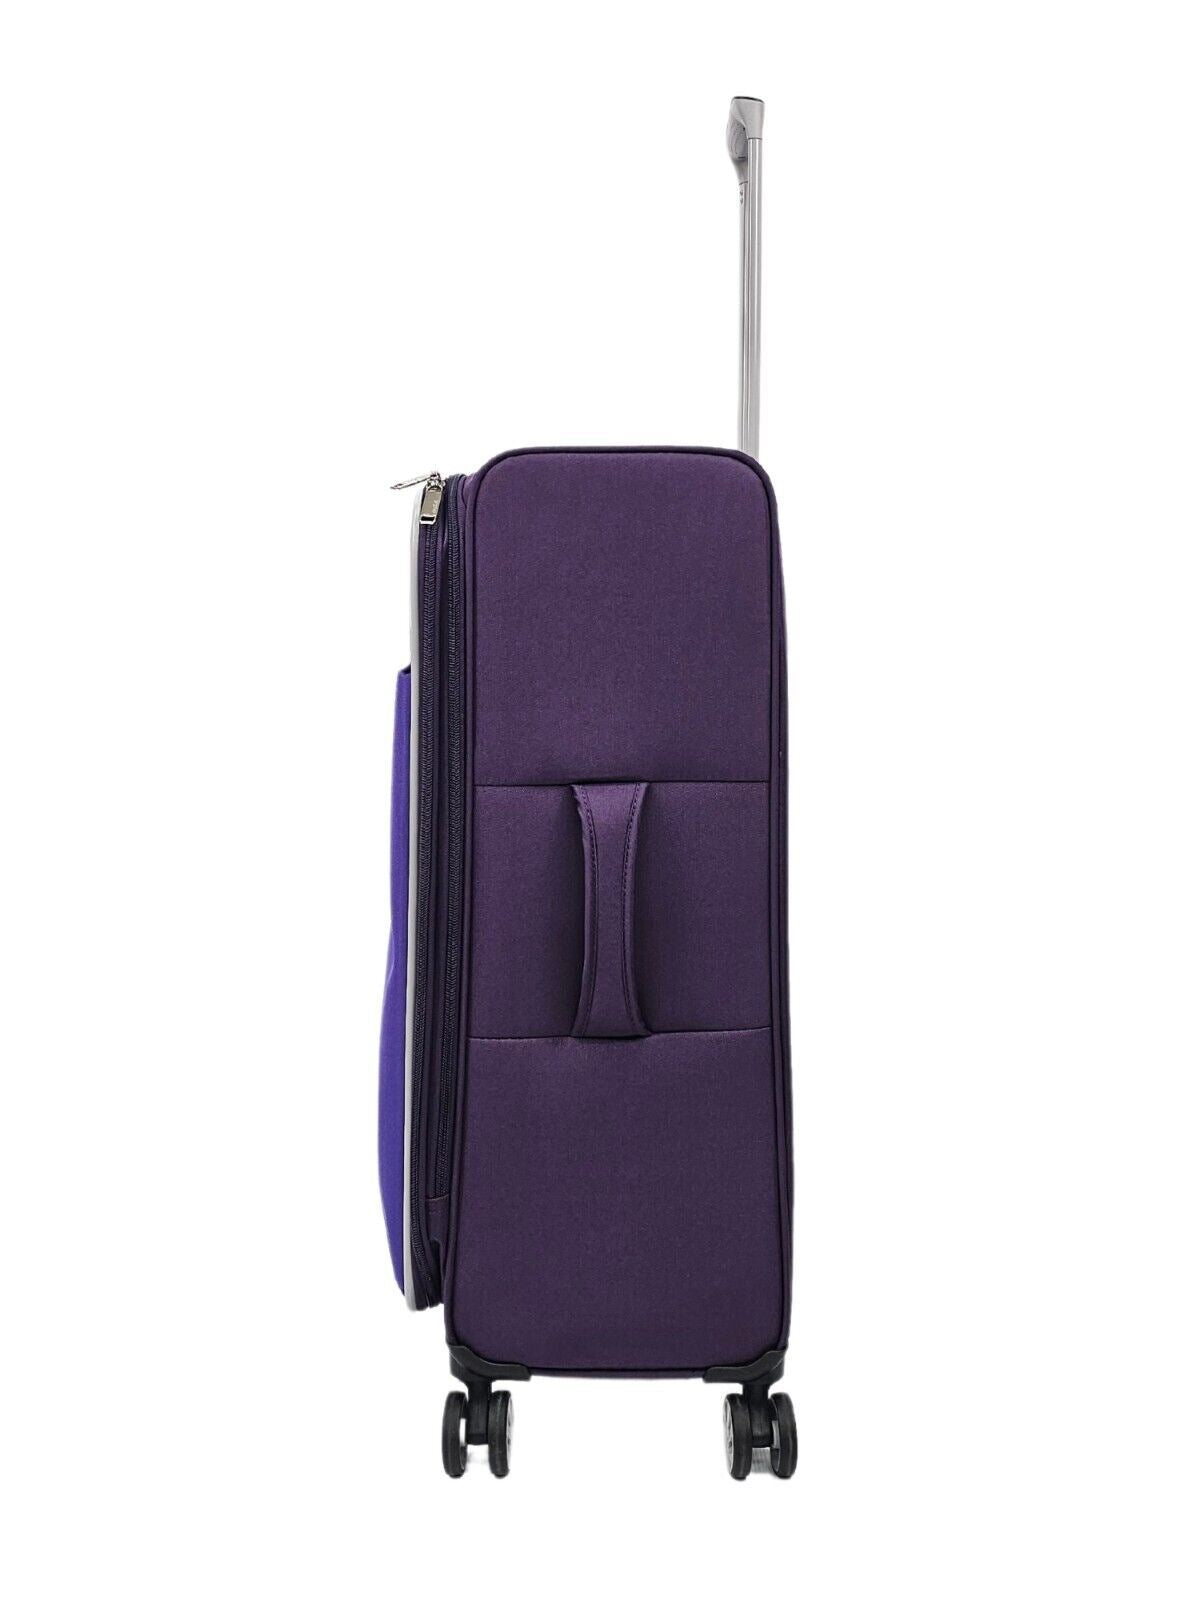 Lightweight Purple Cabin Suitcases 4 Wheel Luggage Travel Bag